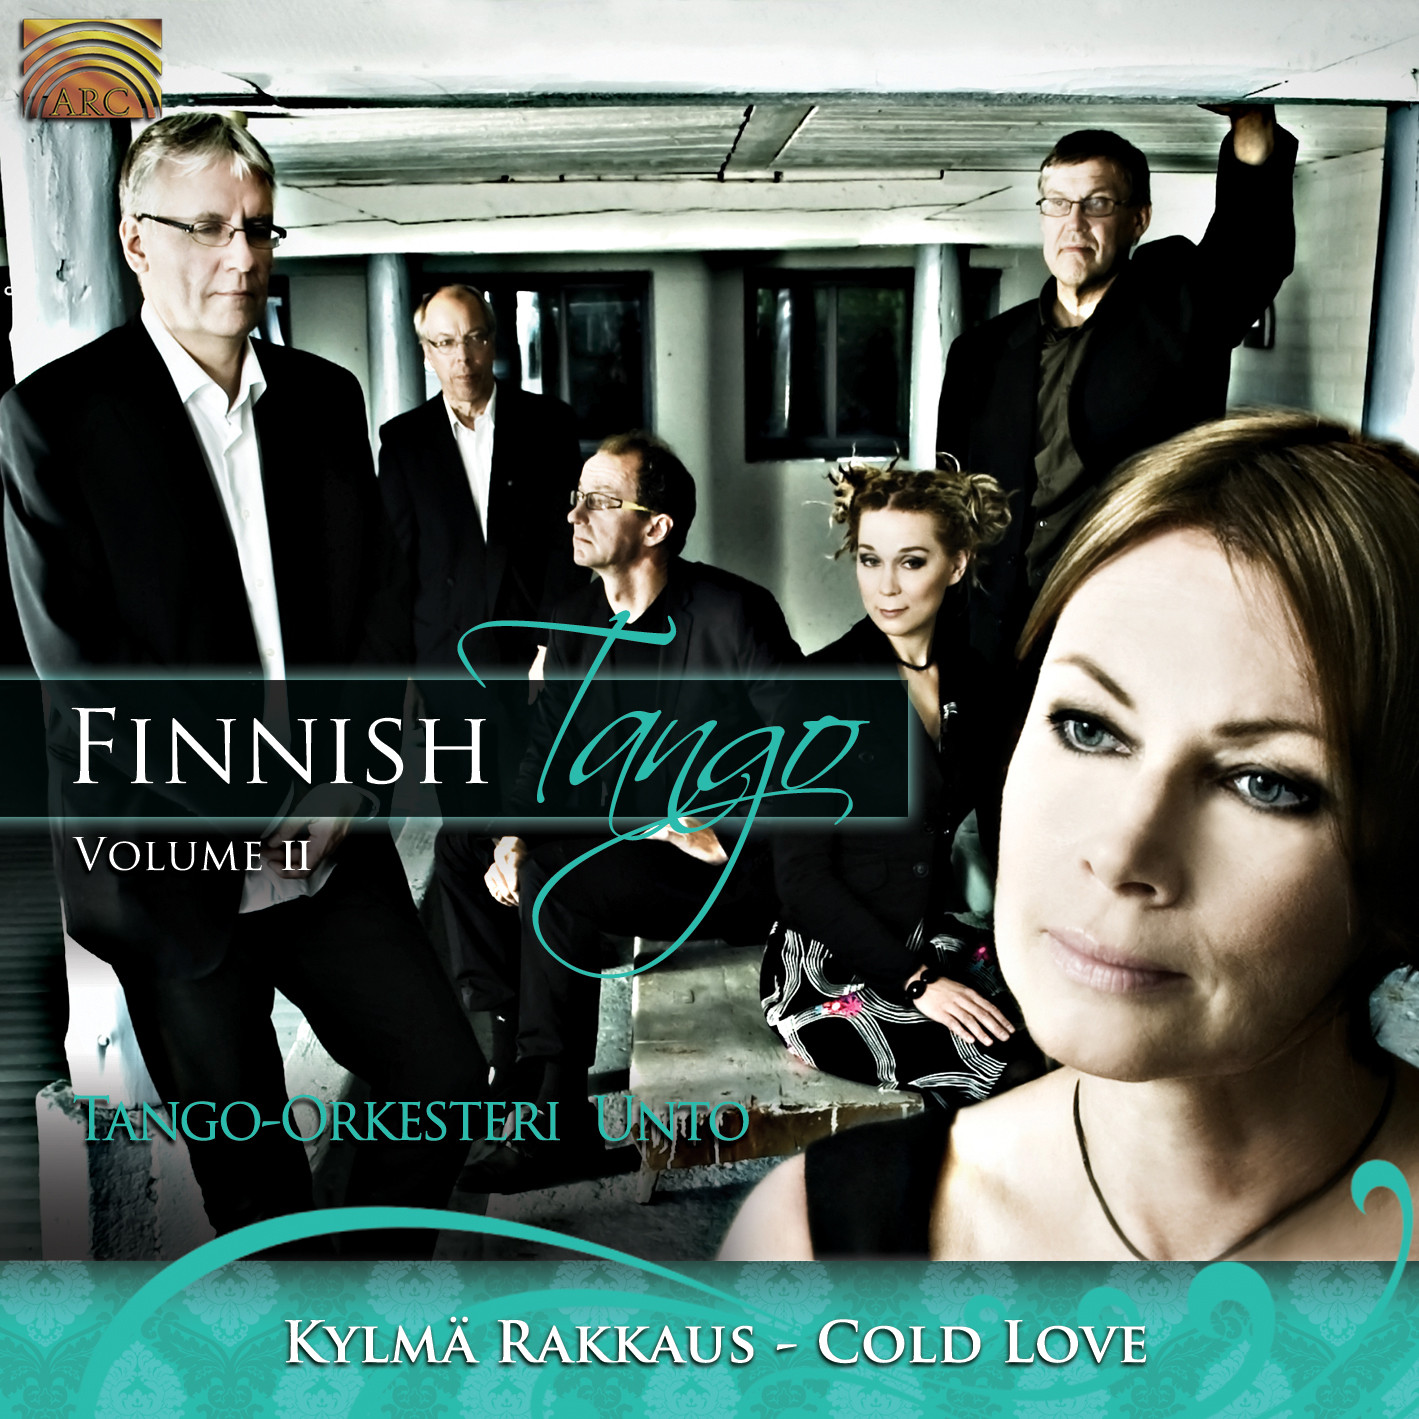 EUCD2281 Finnish Tango, Vol 2 - Kylma Rakkaus - Cold Love